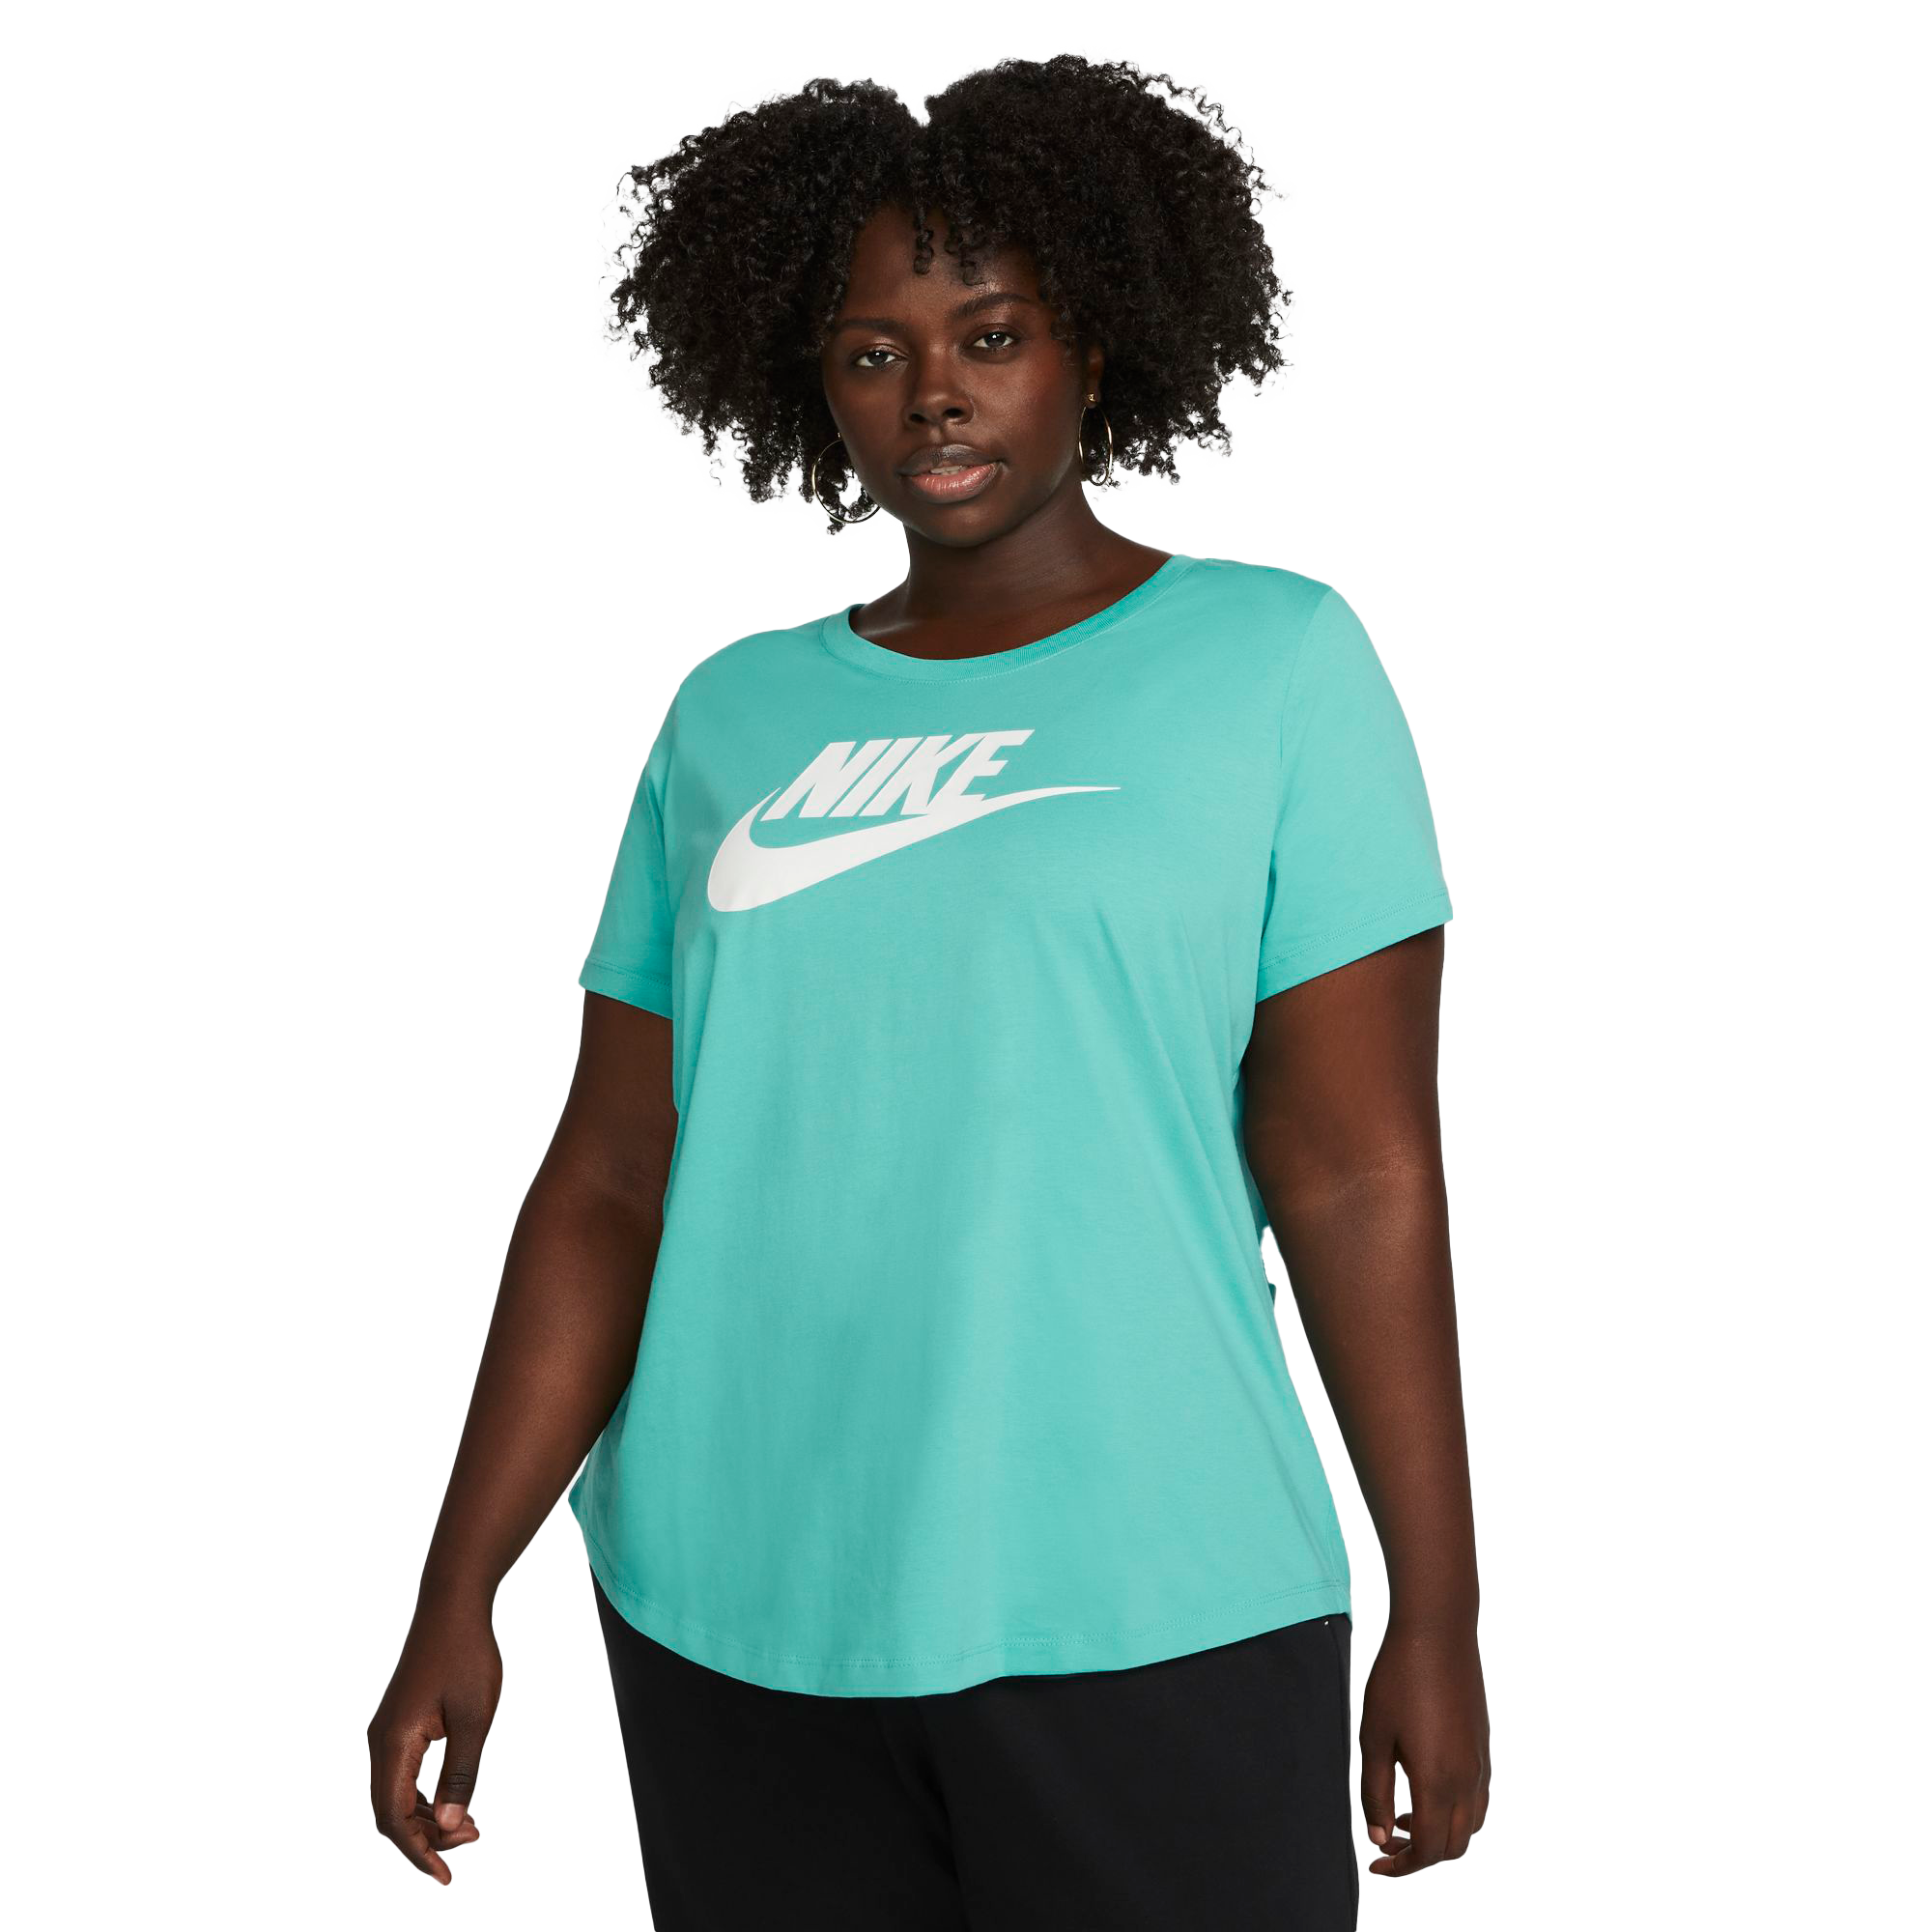 Women's Workout T-Shirts, Athletic Tops - Hibbett